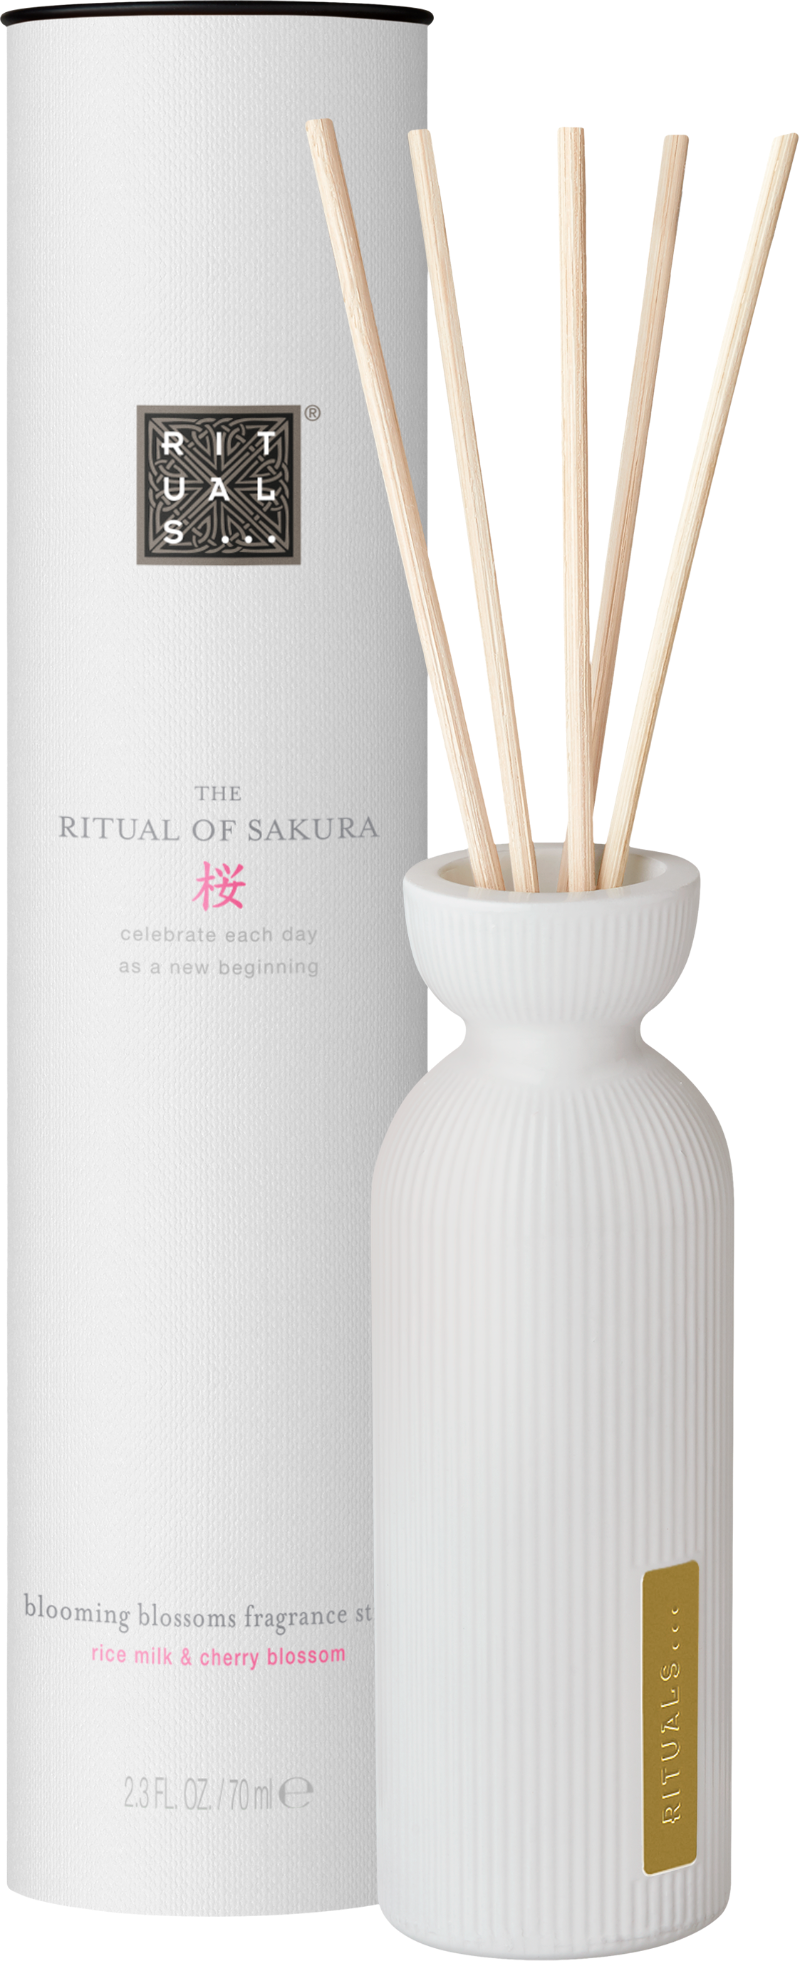 RITUALS The Ritual Of Sakura Anti-Perspirant Stick ingredients (Explained)